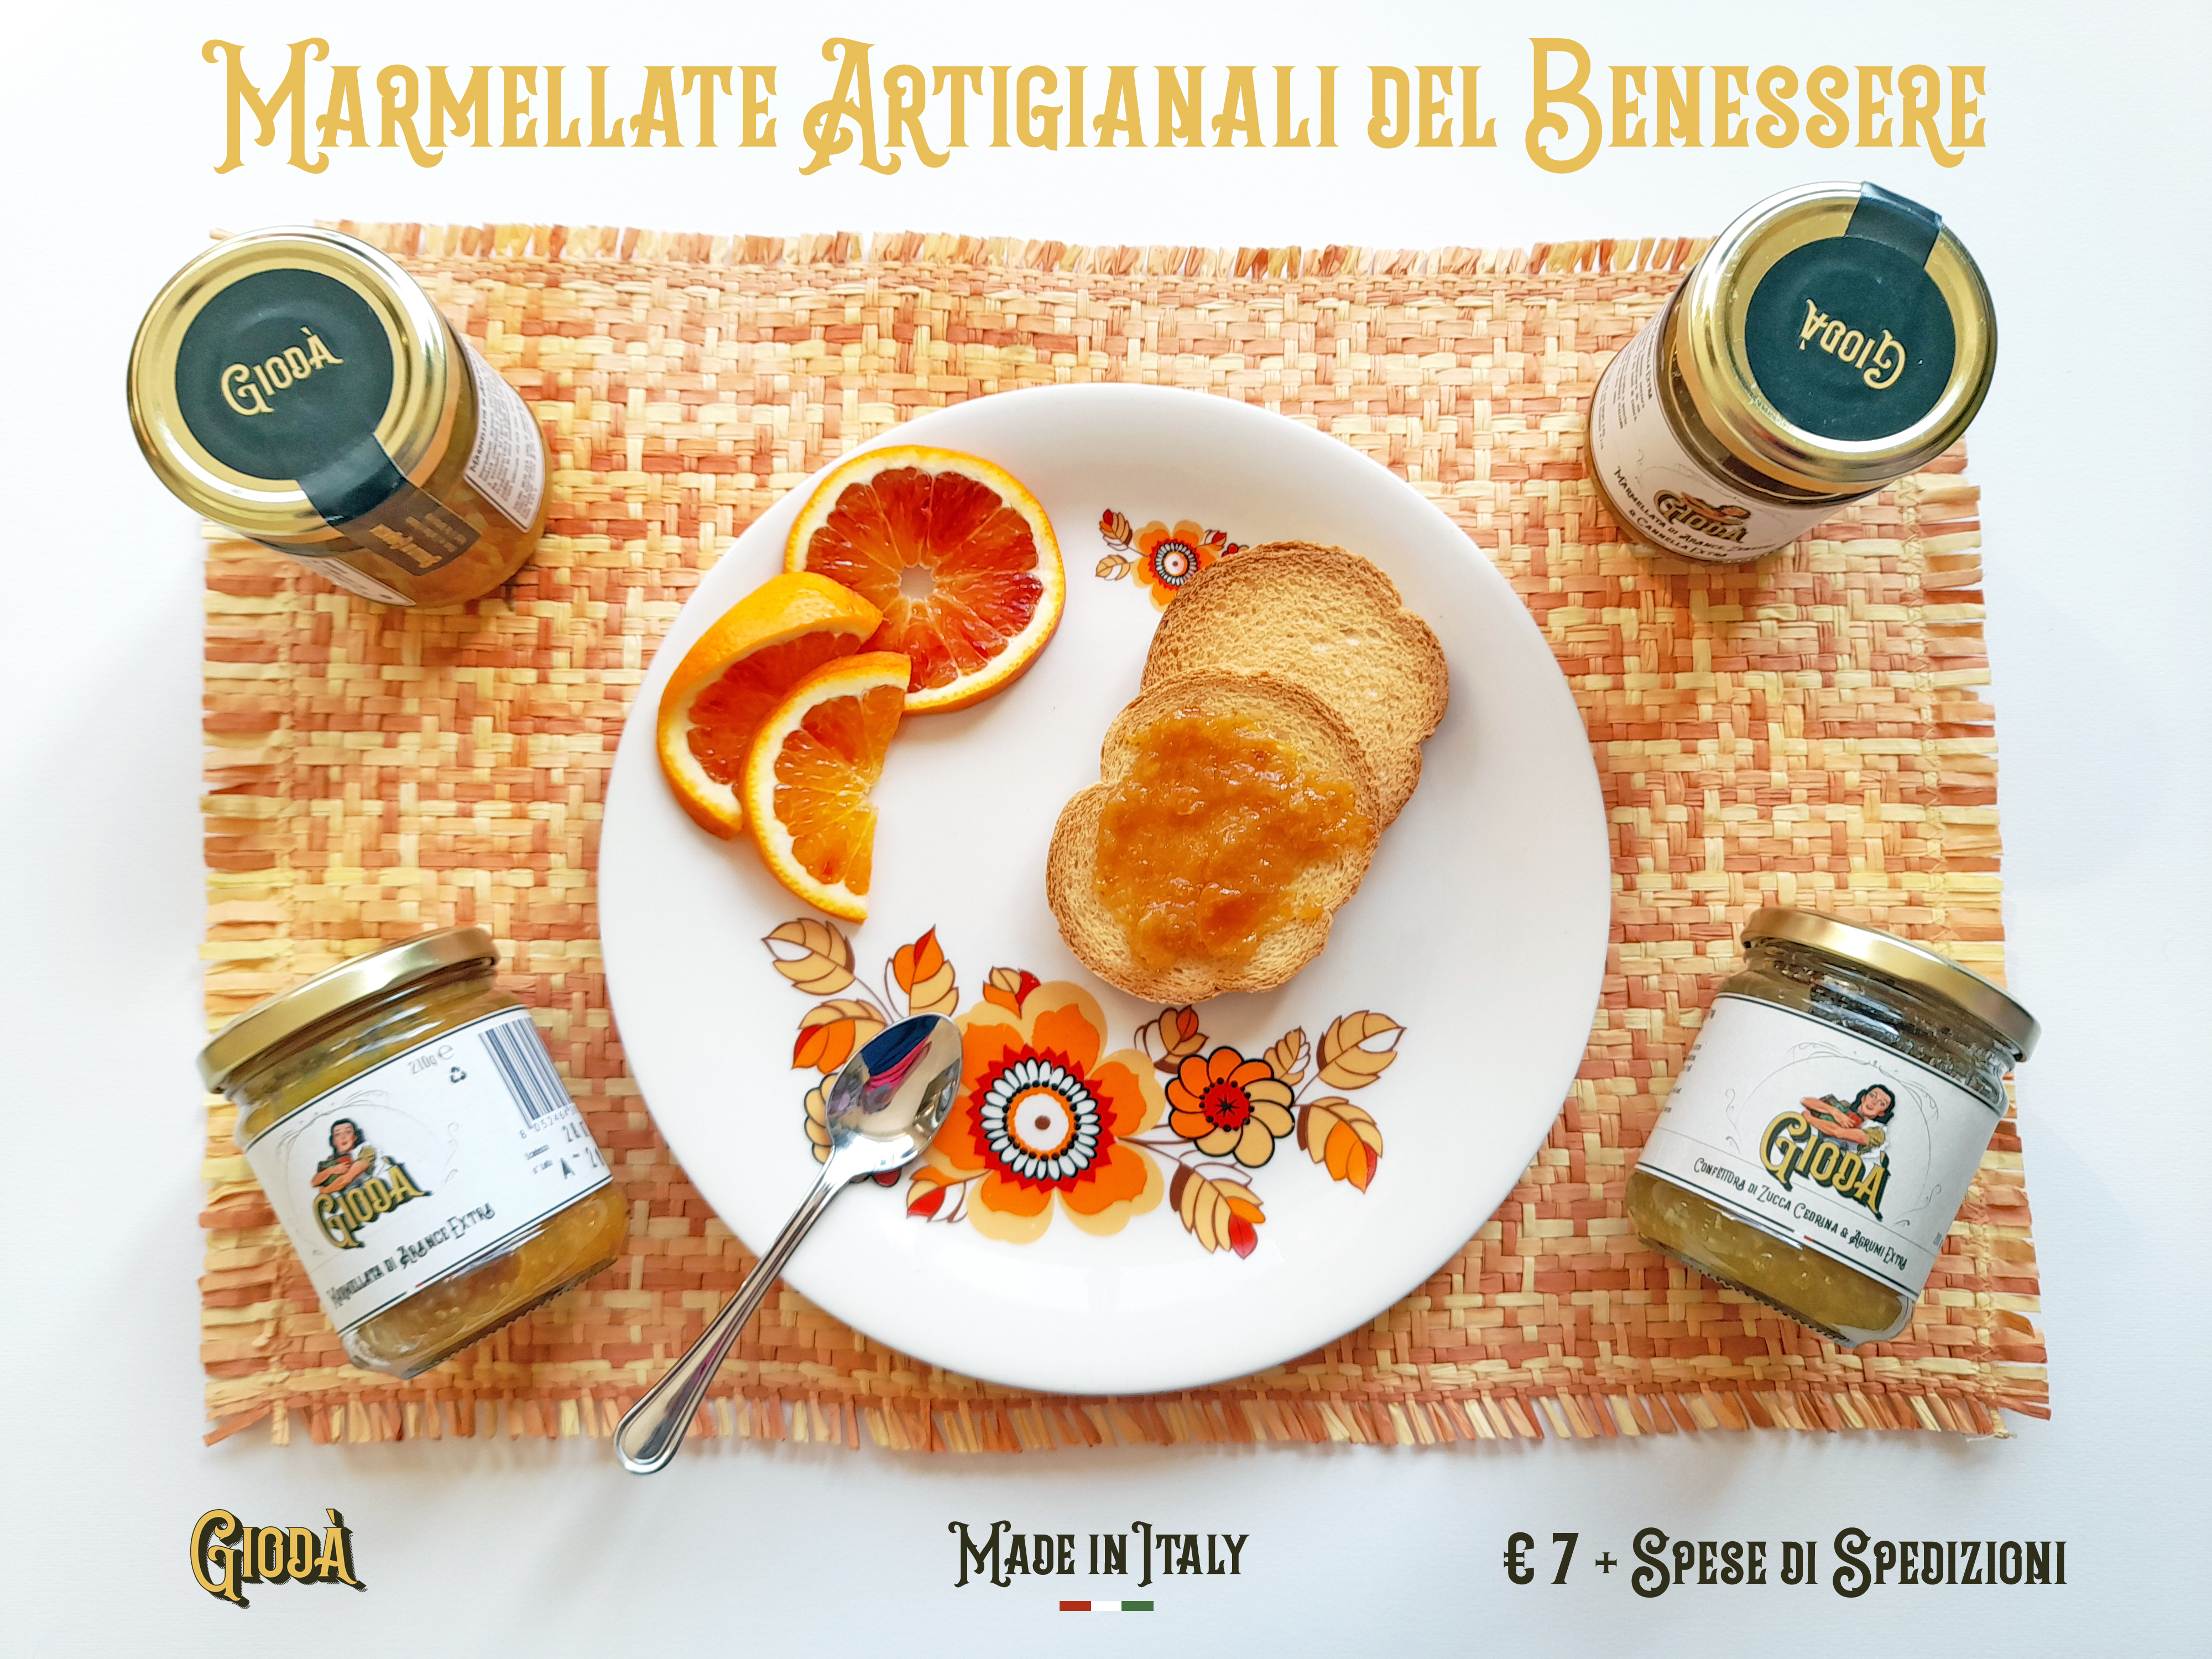 Marmellate artigianali del benessere - Artisan marmalades of well-being